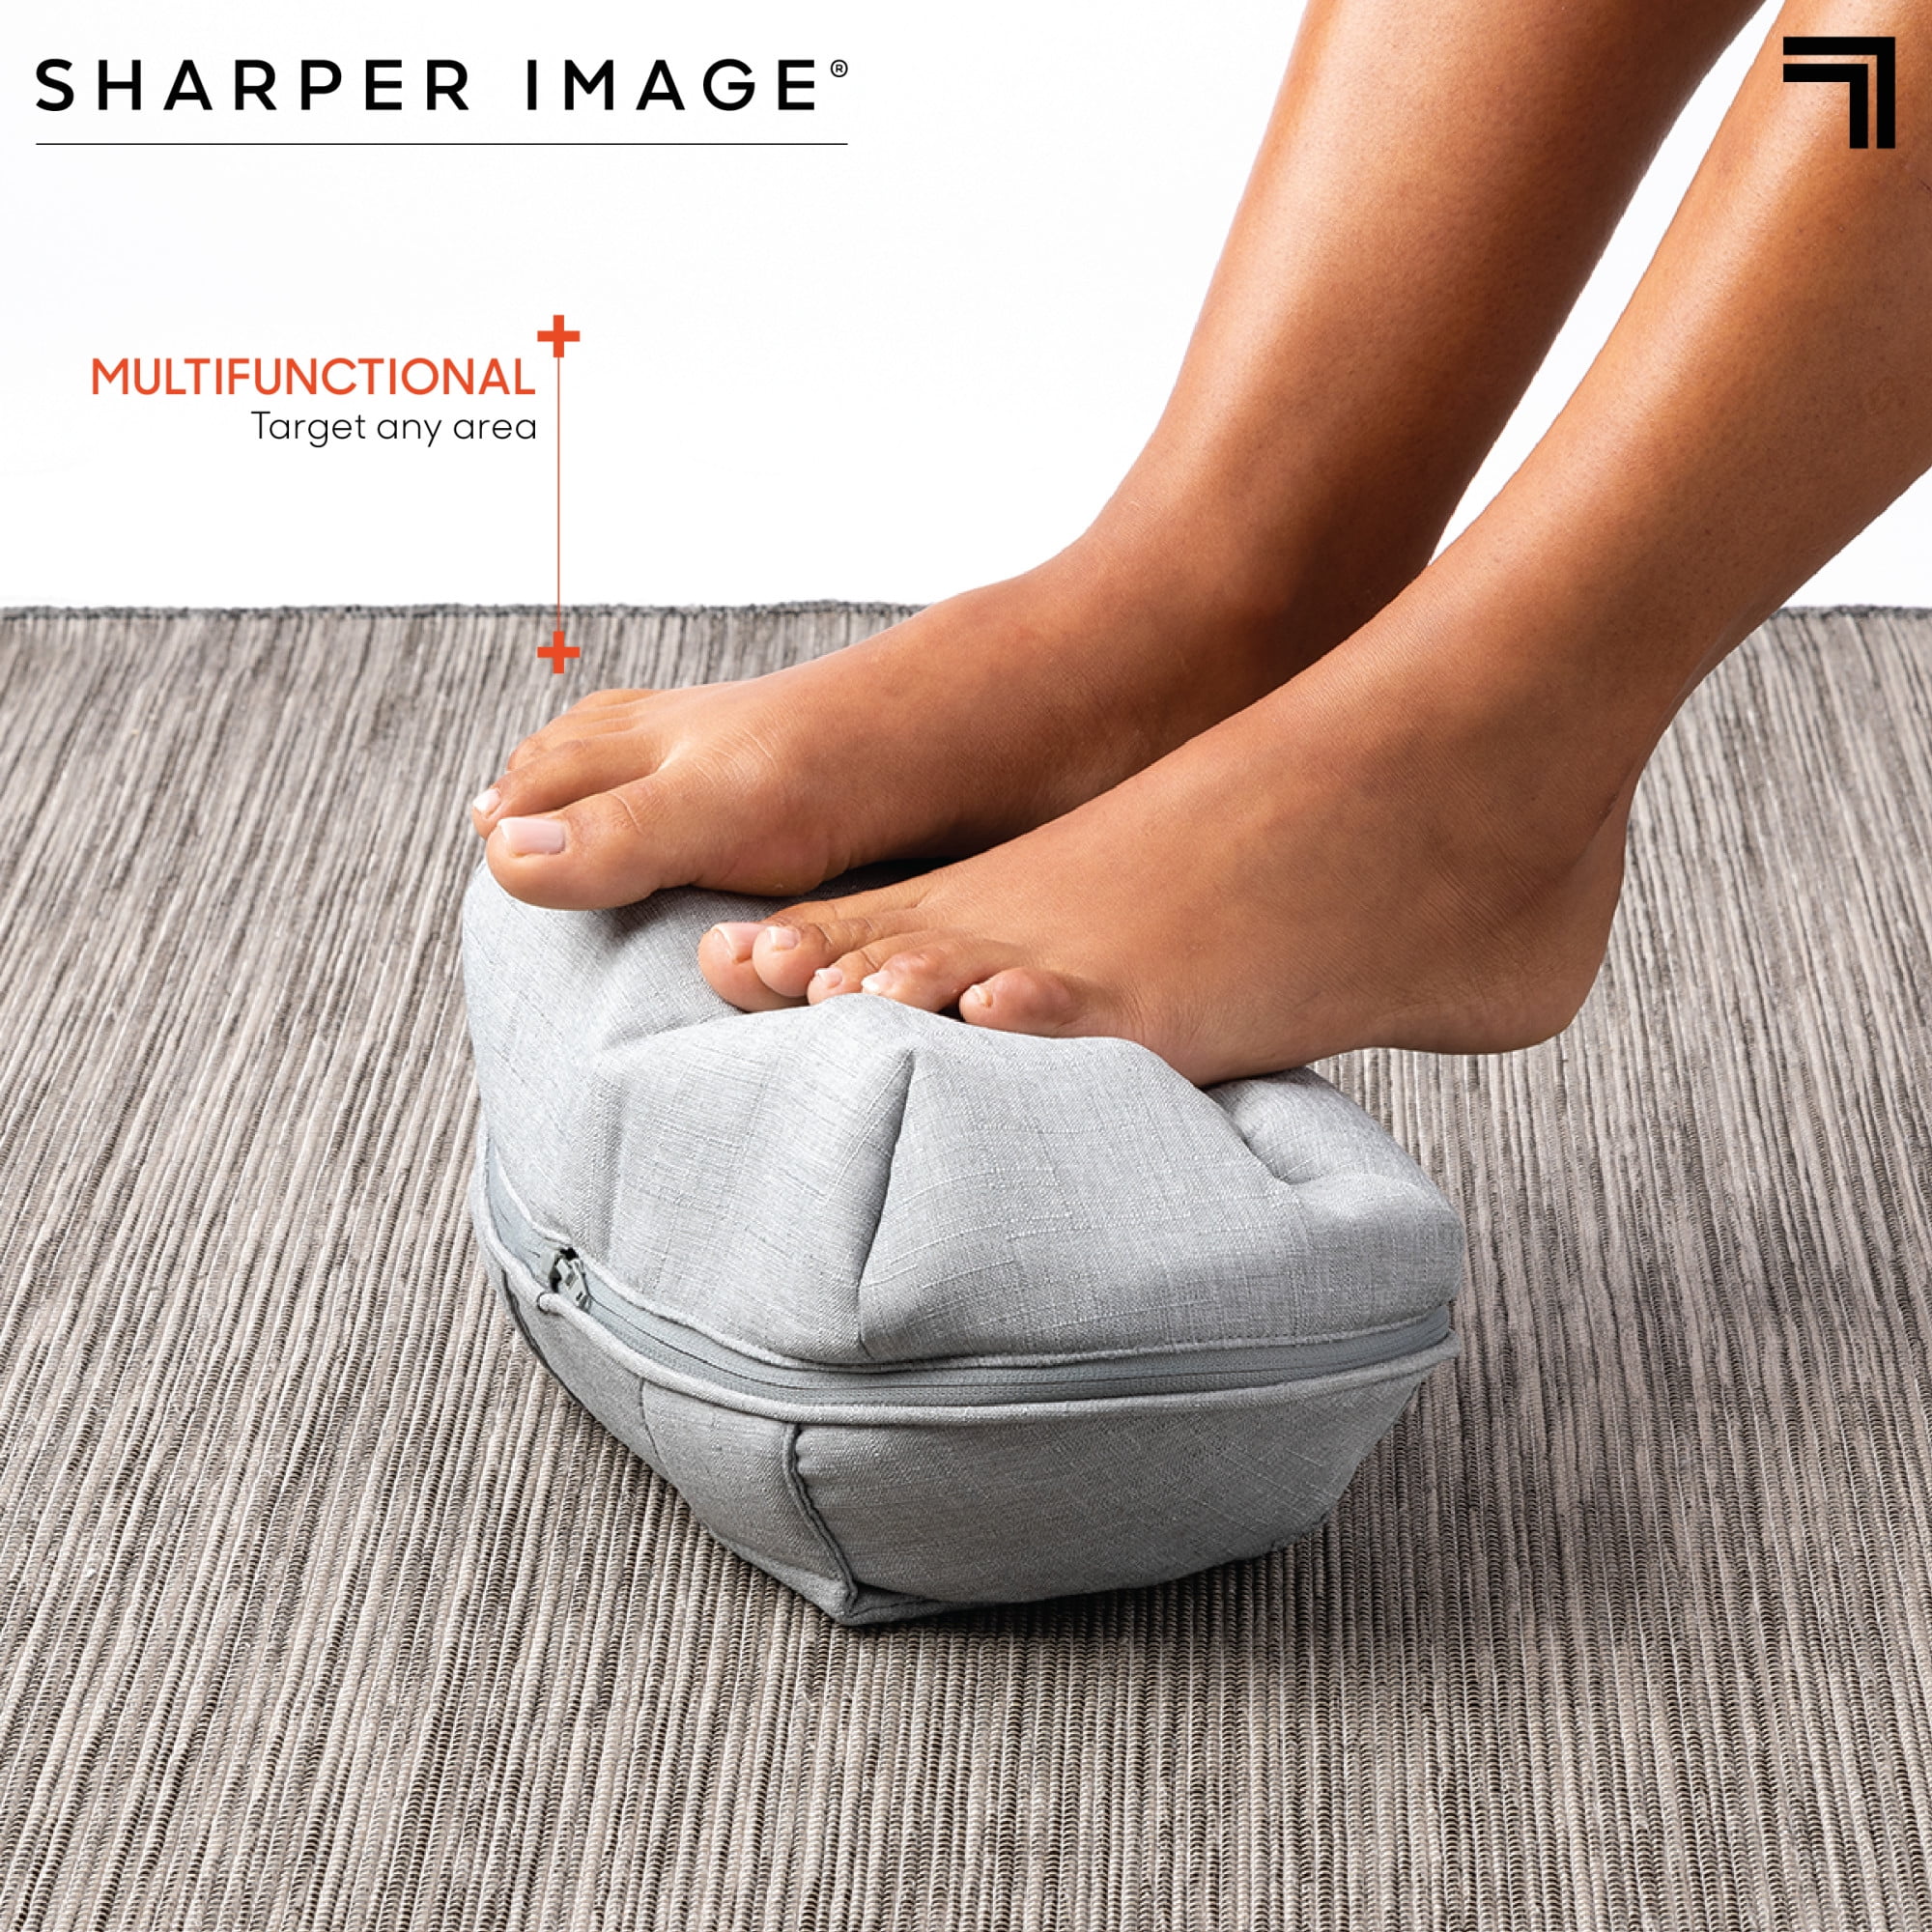 Customer Reviews: Sharper Image Shiatsu Full Body Multifunction Cordless  Massager - CVS Pharmacy Page 4